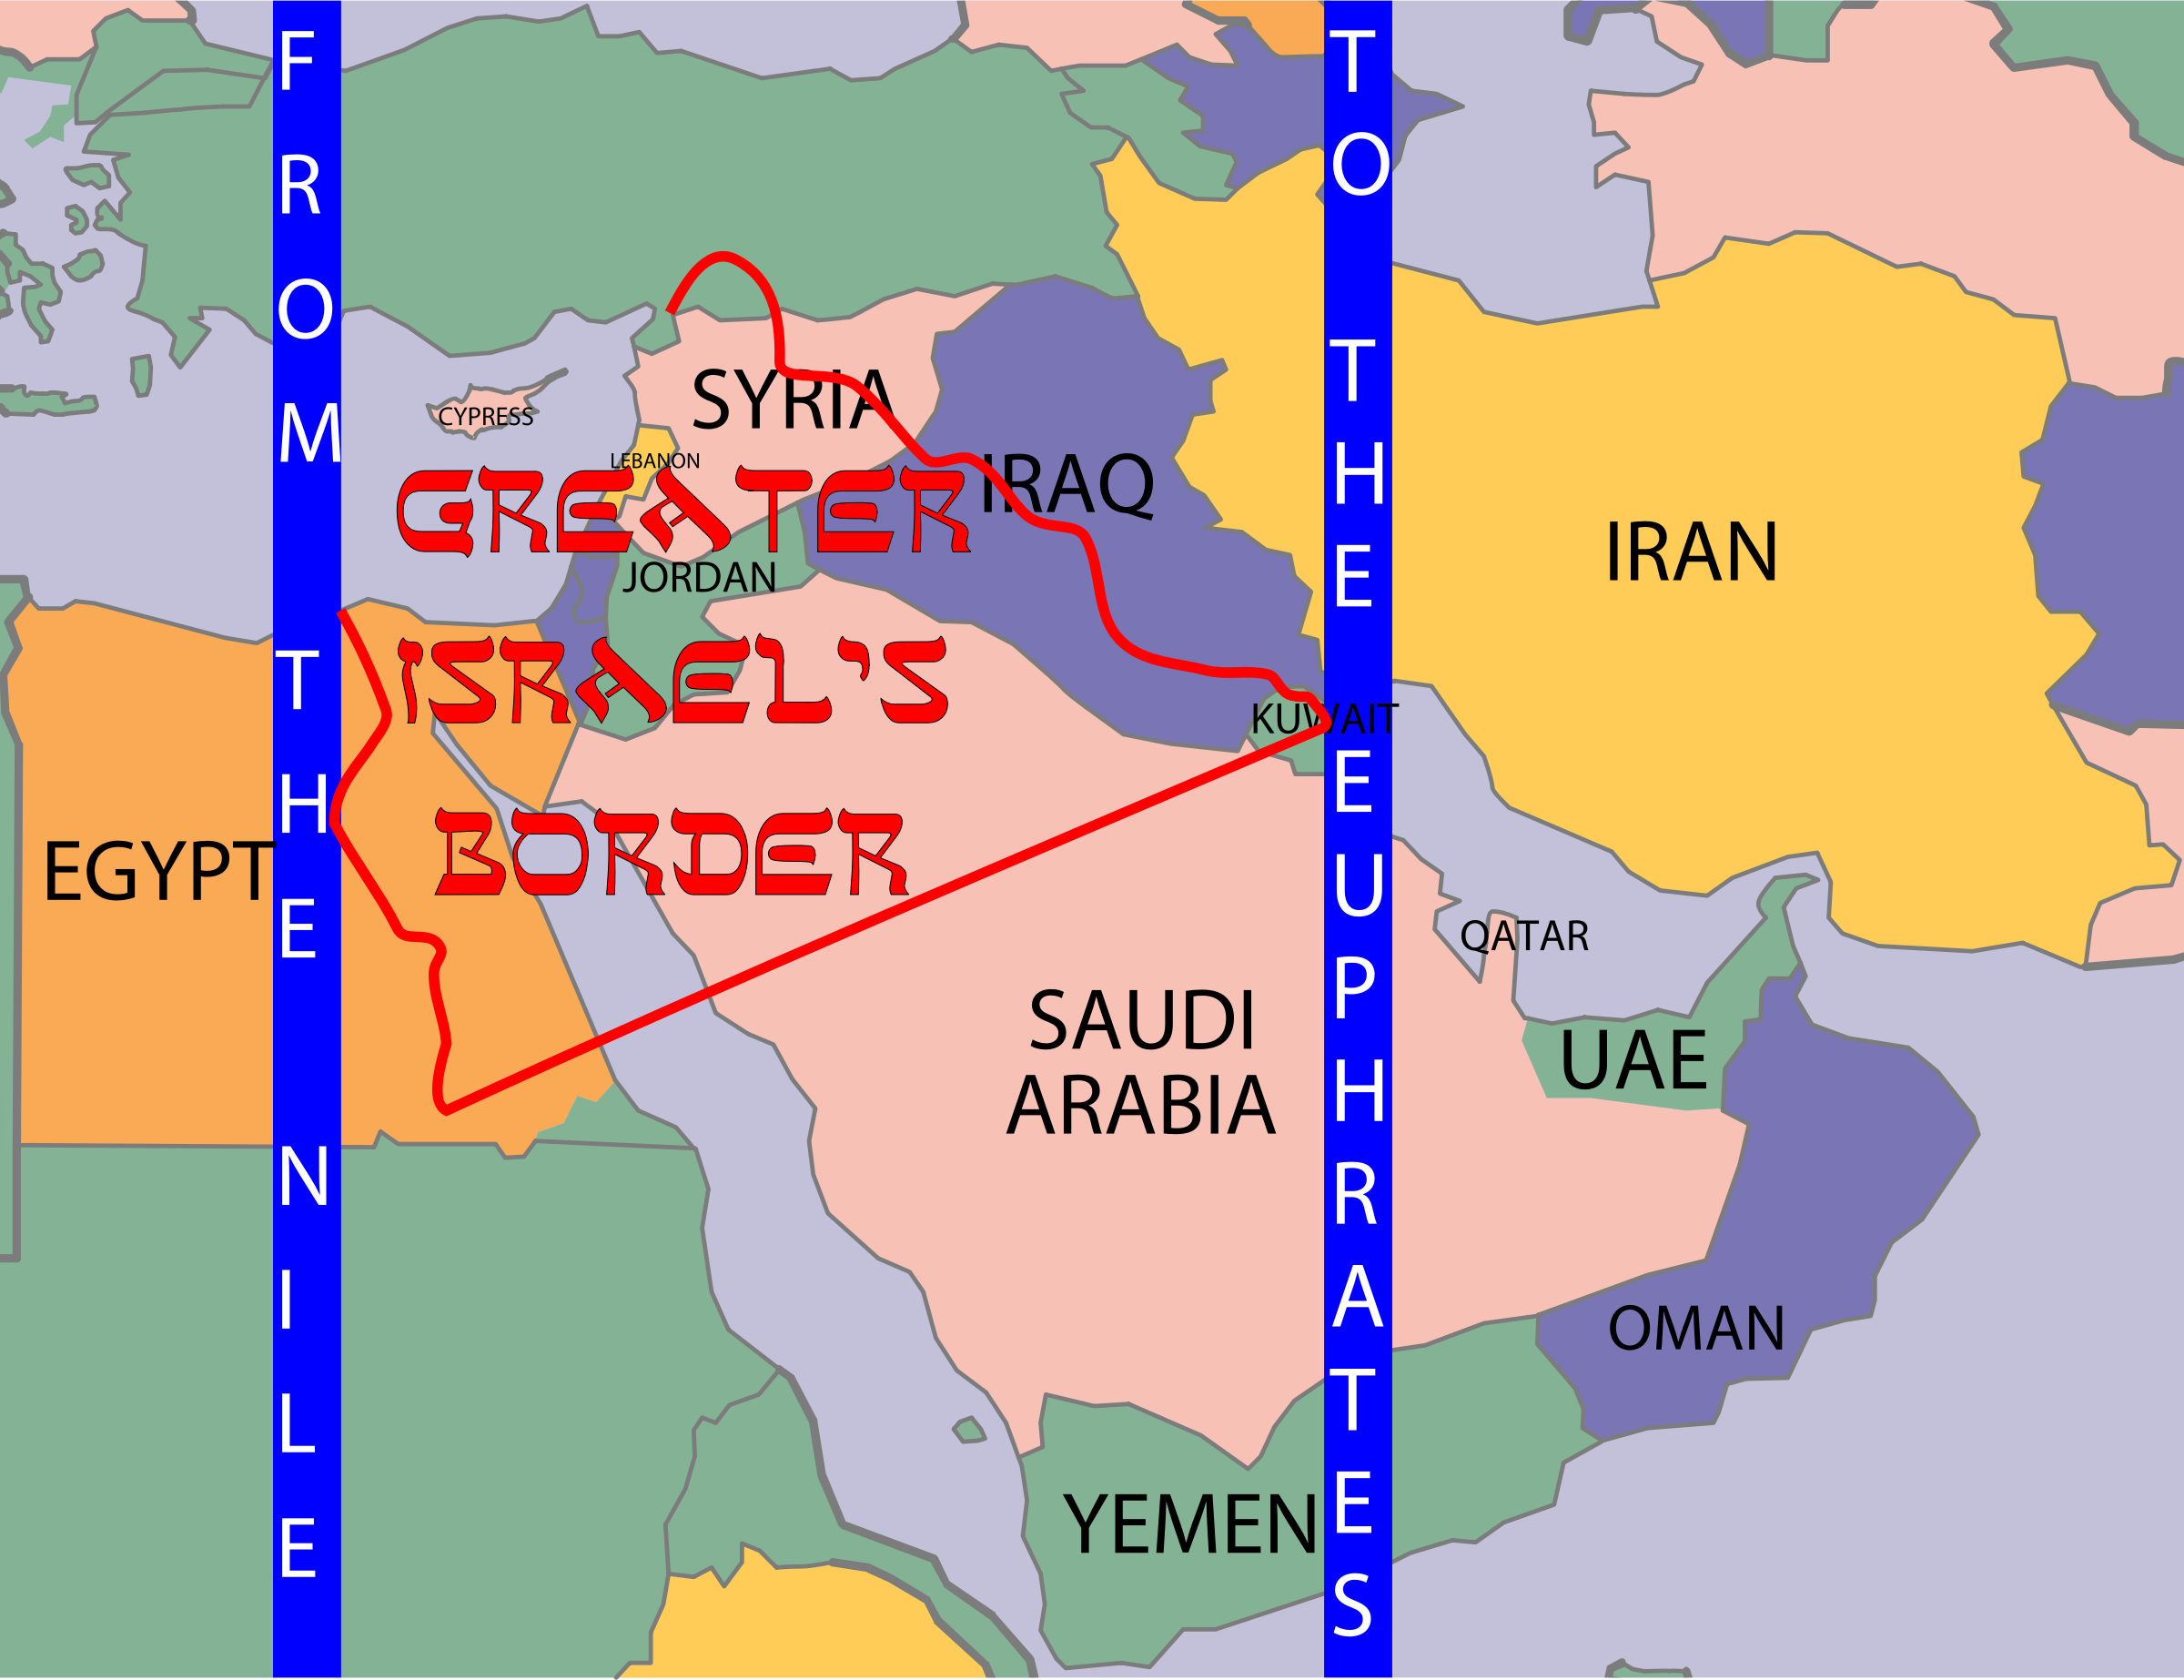 eretz-israel-greater-israel-borders-map.png